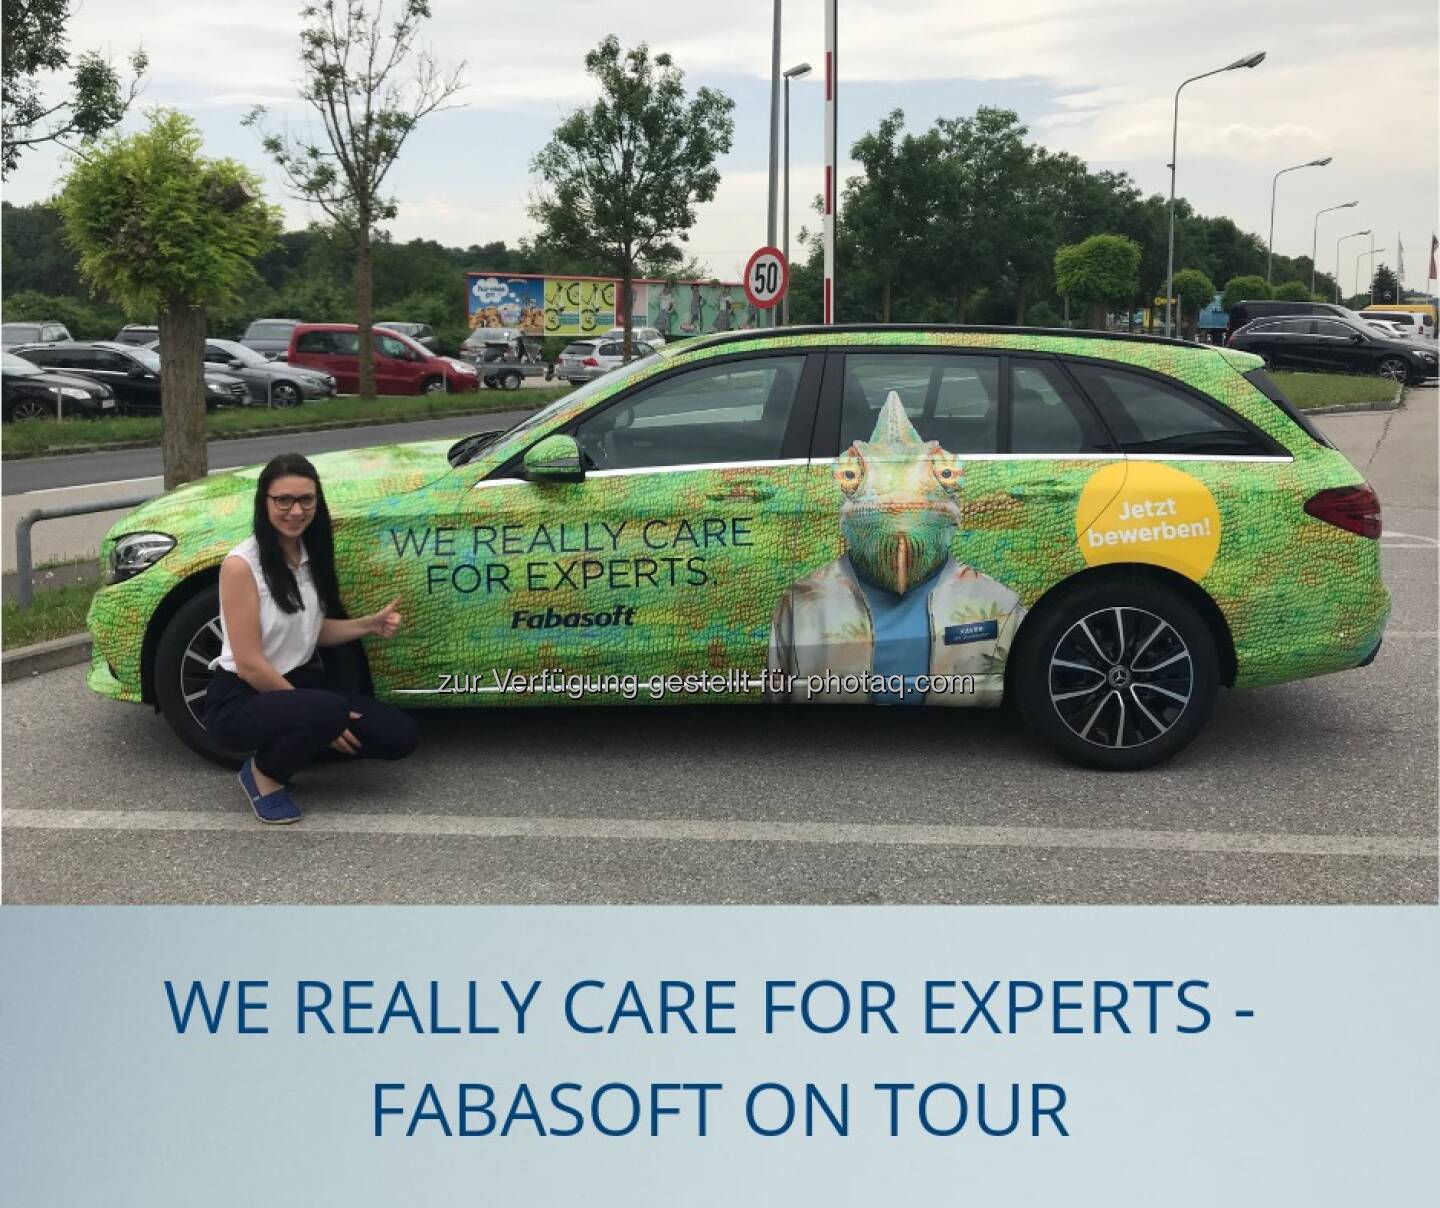 Die Fabasoft Experts sind ab jetzt on tour - mit unserem neuen, coolen Poolcar :-) ...  Source: http://facebook.com/fabasoft